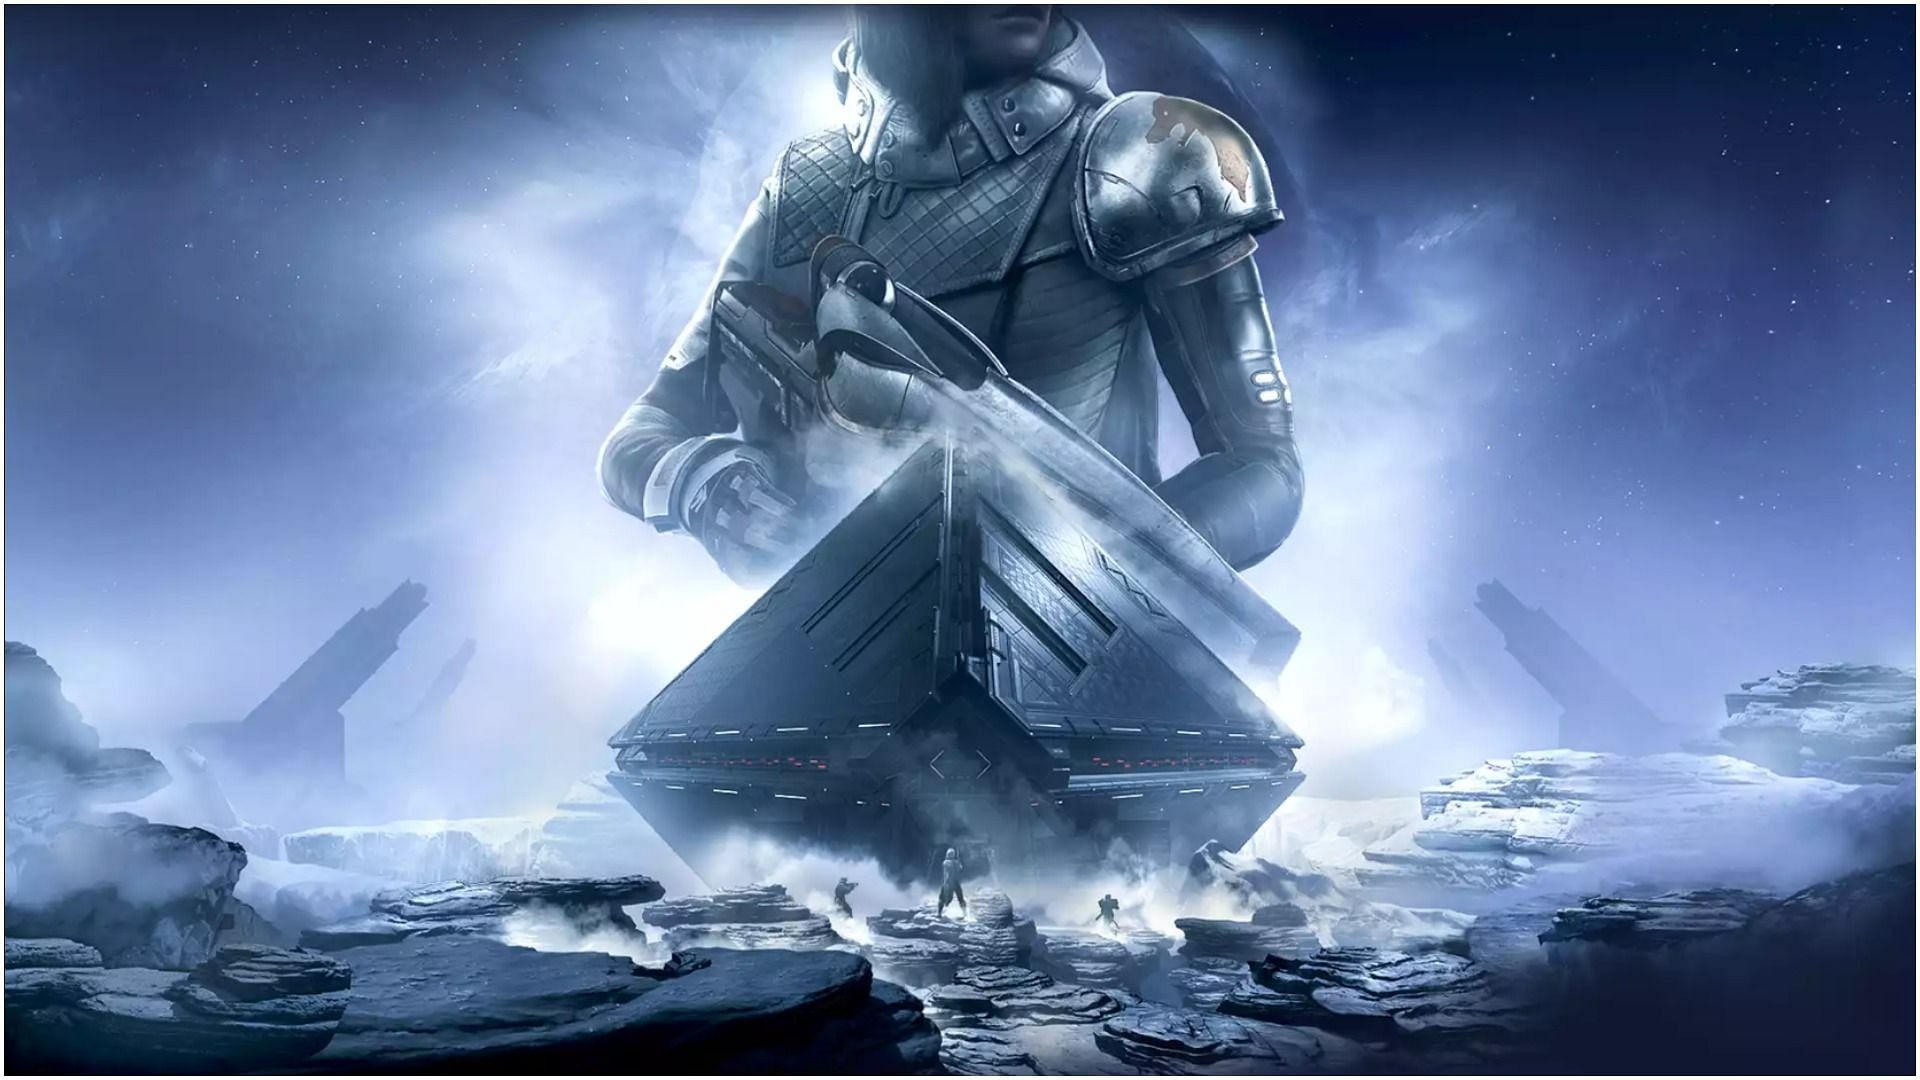 Destiny 2 Warmind official cover photo (Image via Bungie)